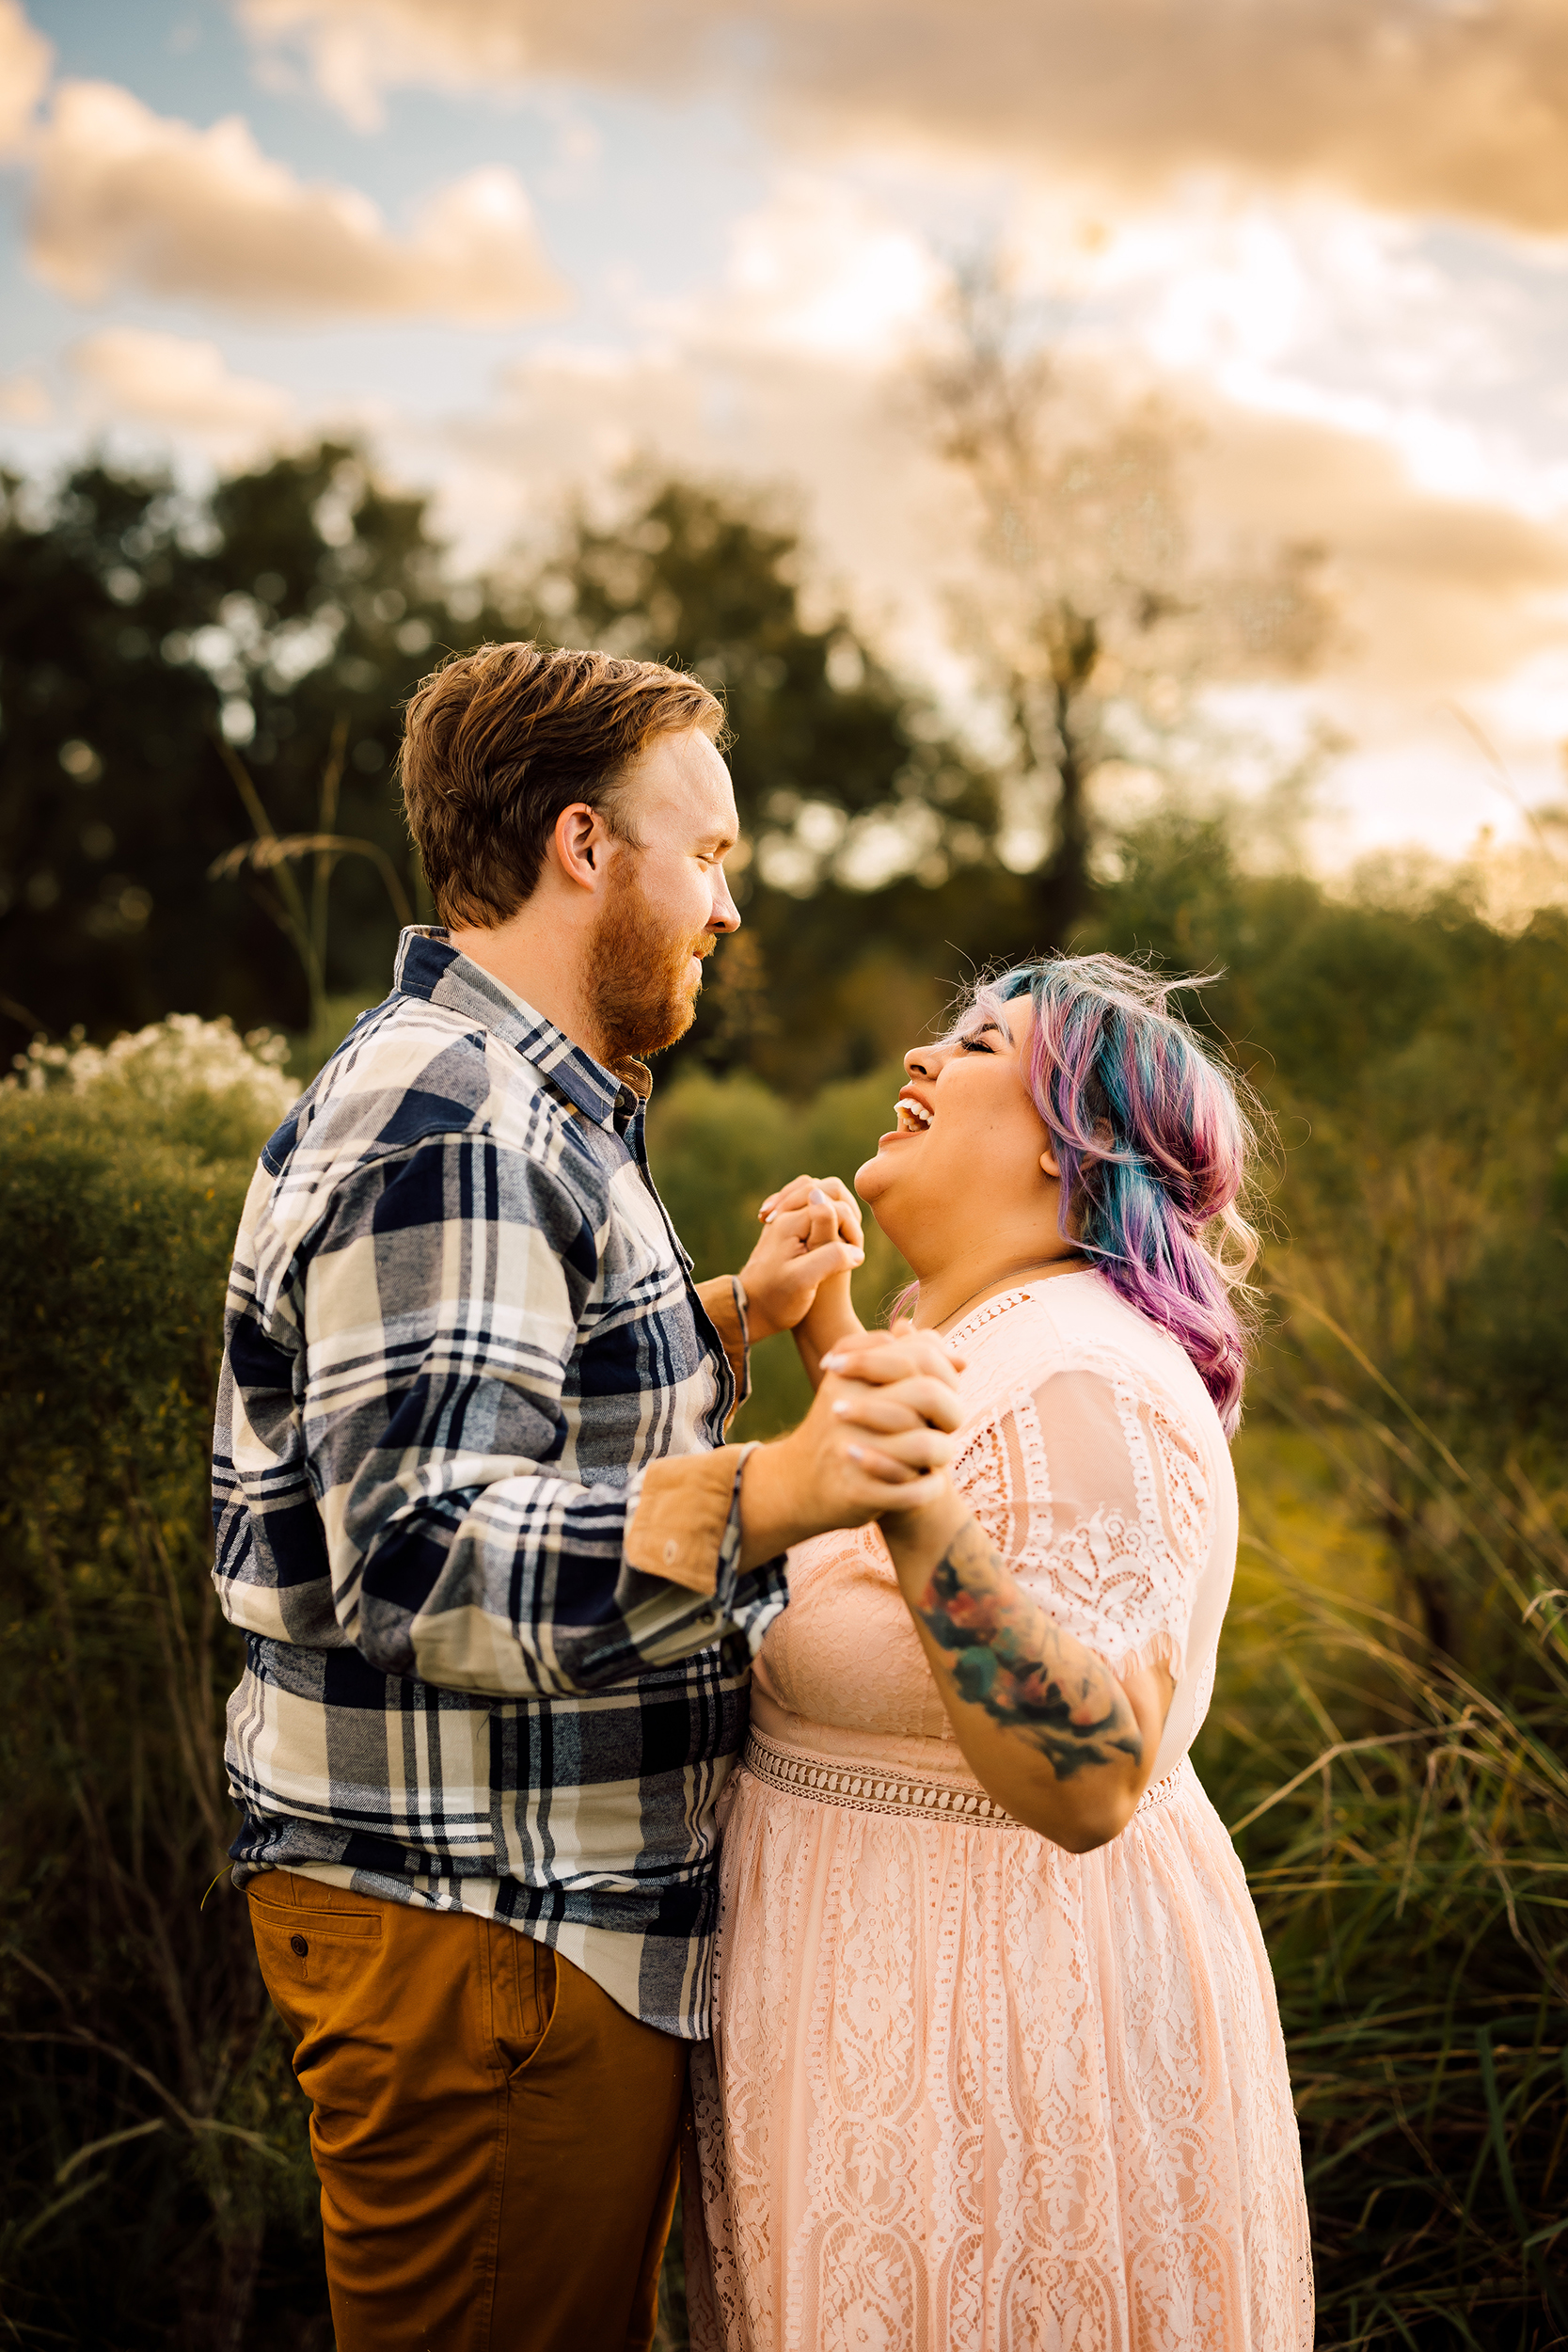 9 Fun, Romantic & Unique Couple Photoshoot Ideas with Poses